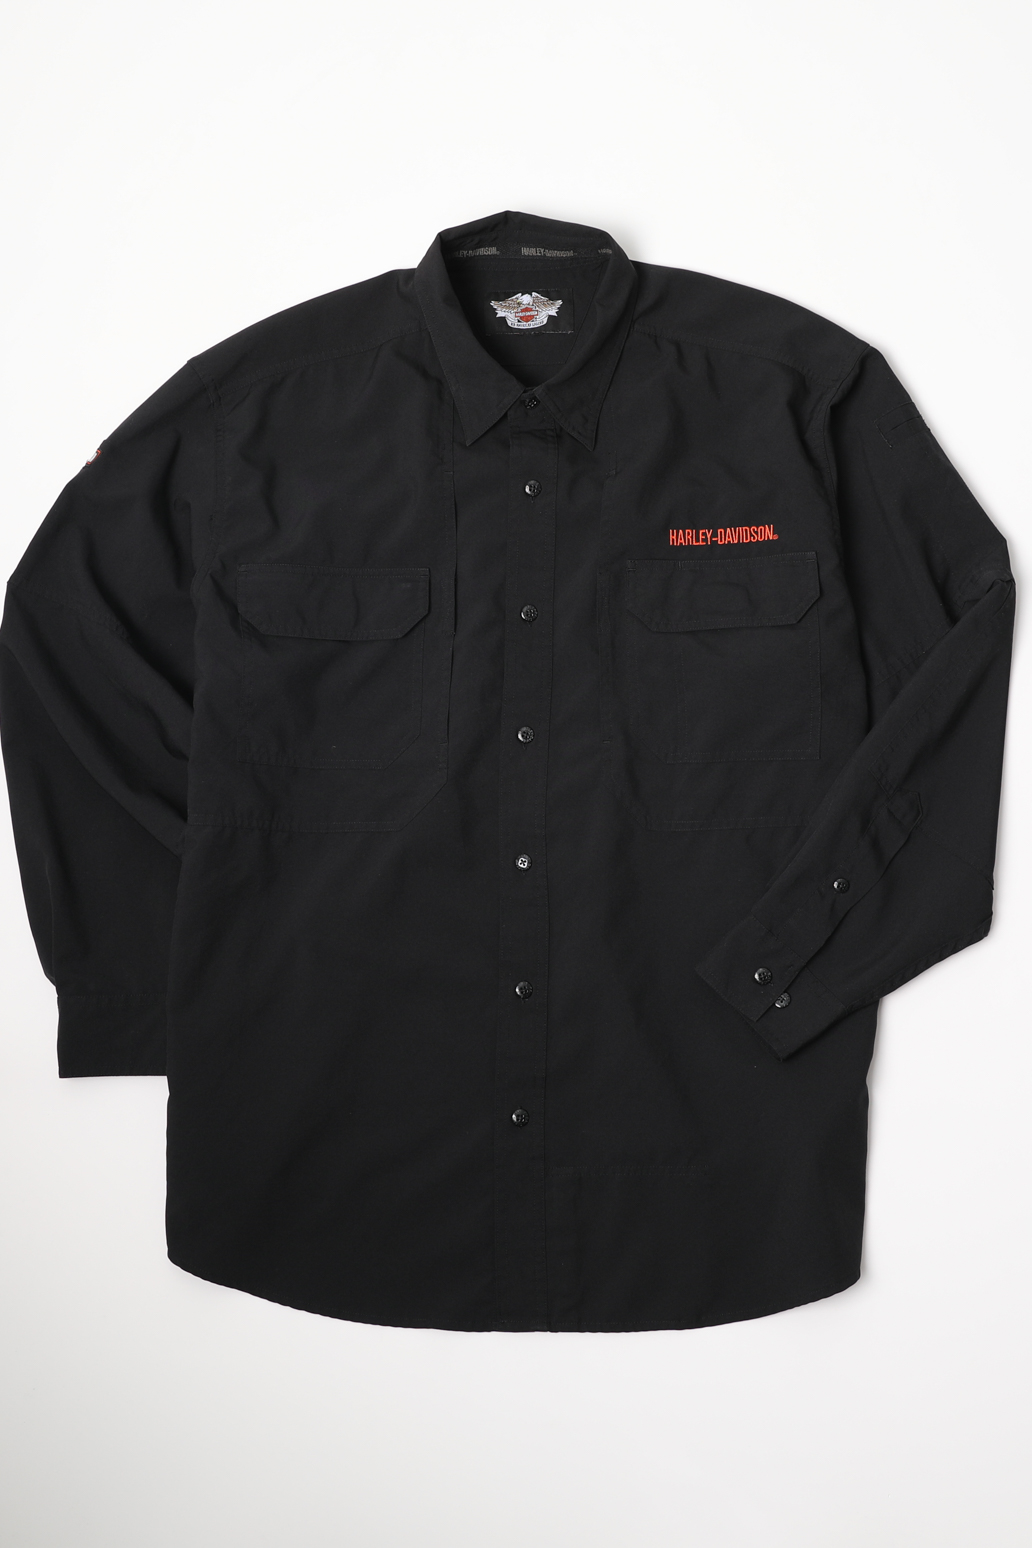 [XL] 할리 데이비슨 셔츠 (H552)